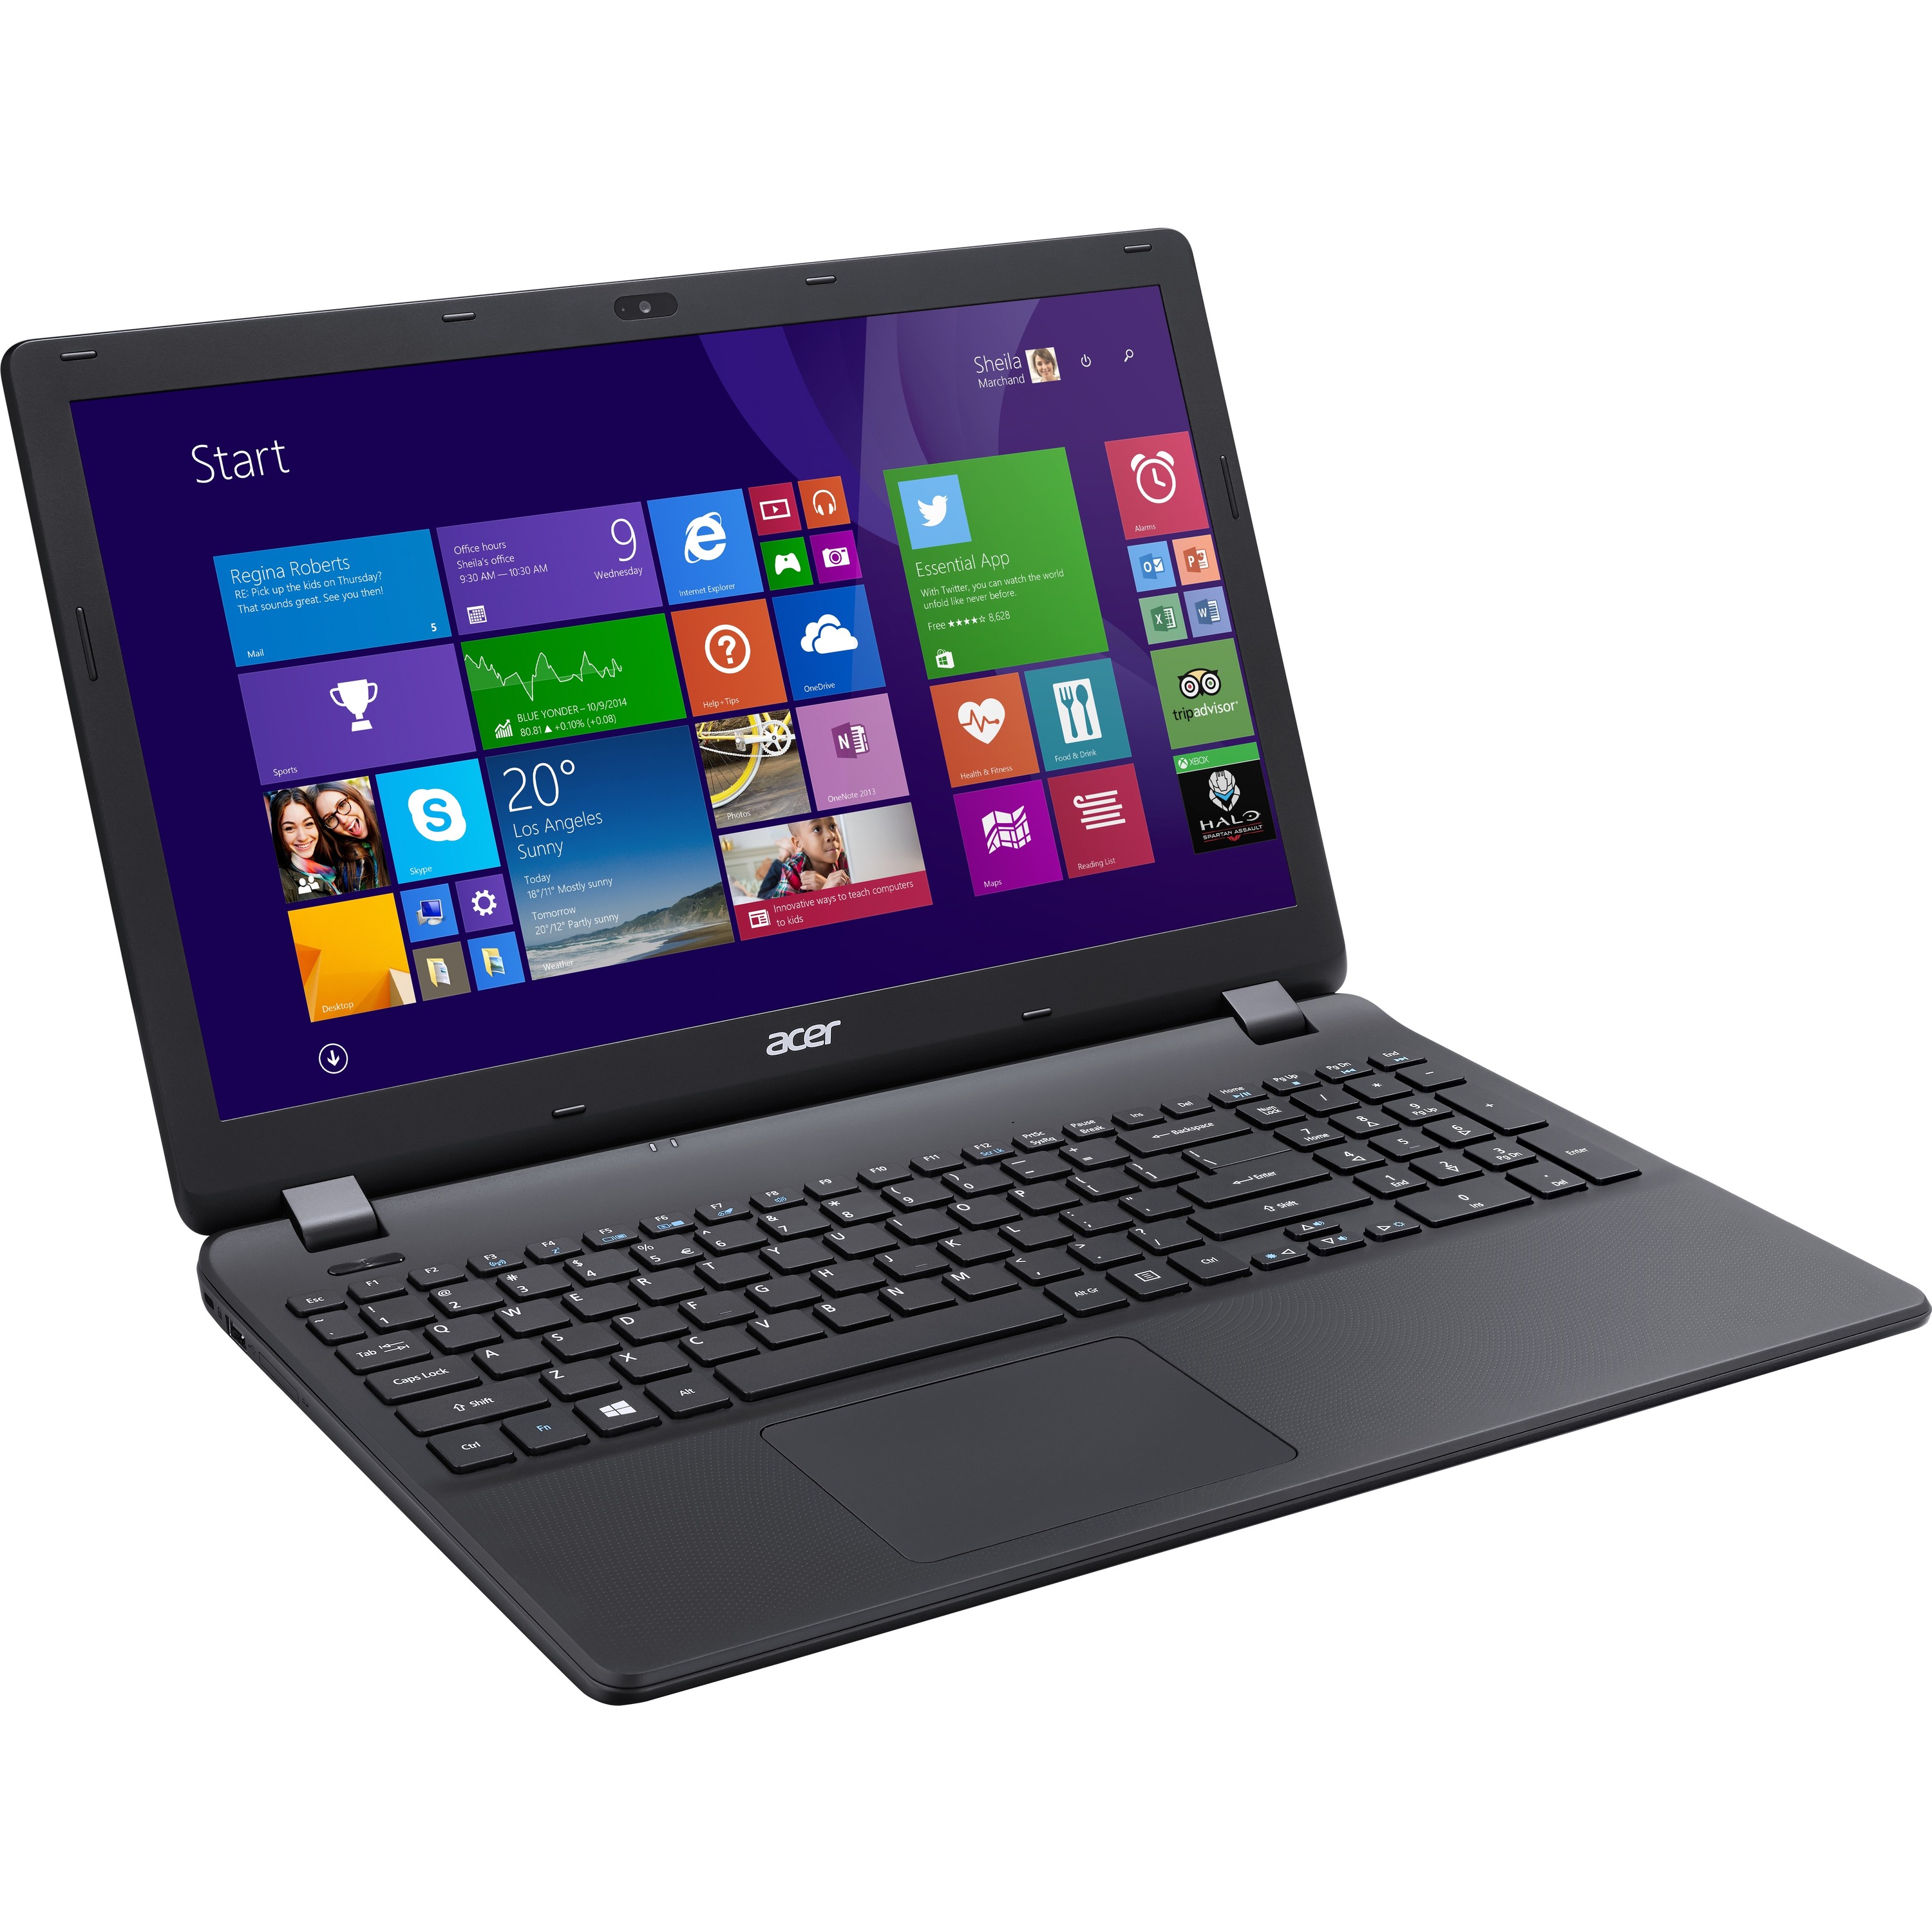 Acer Aspire Laptop Celeron N2840 Dual-Core 2.16GHz 4GB RAM 500GB HDD ...